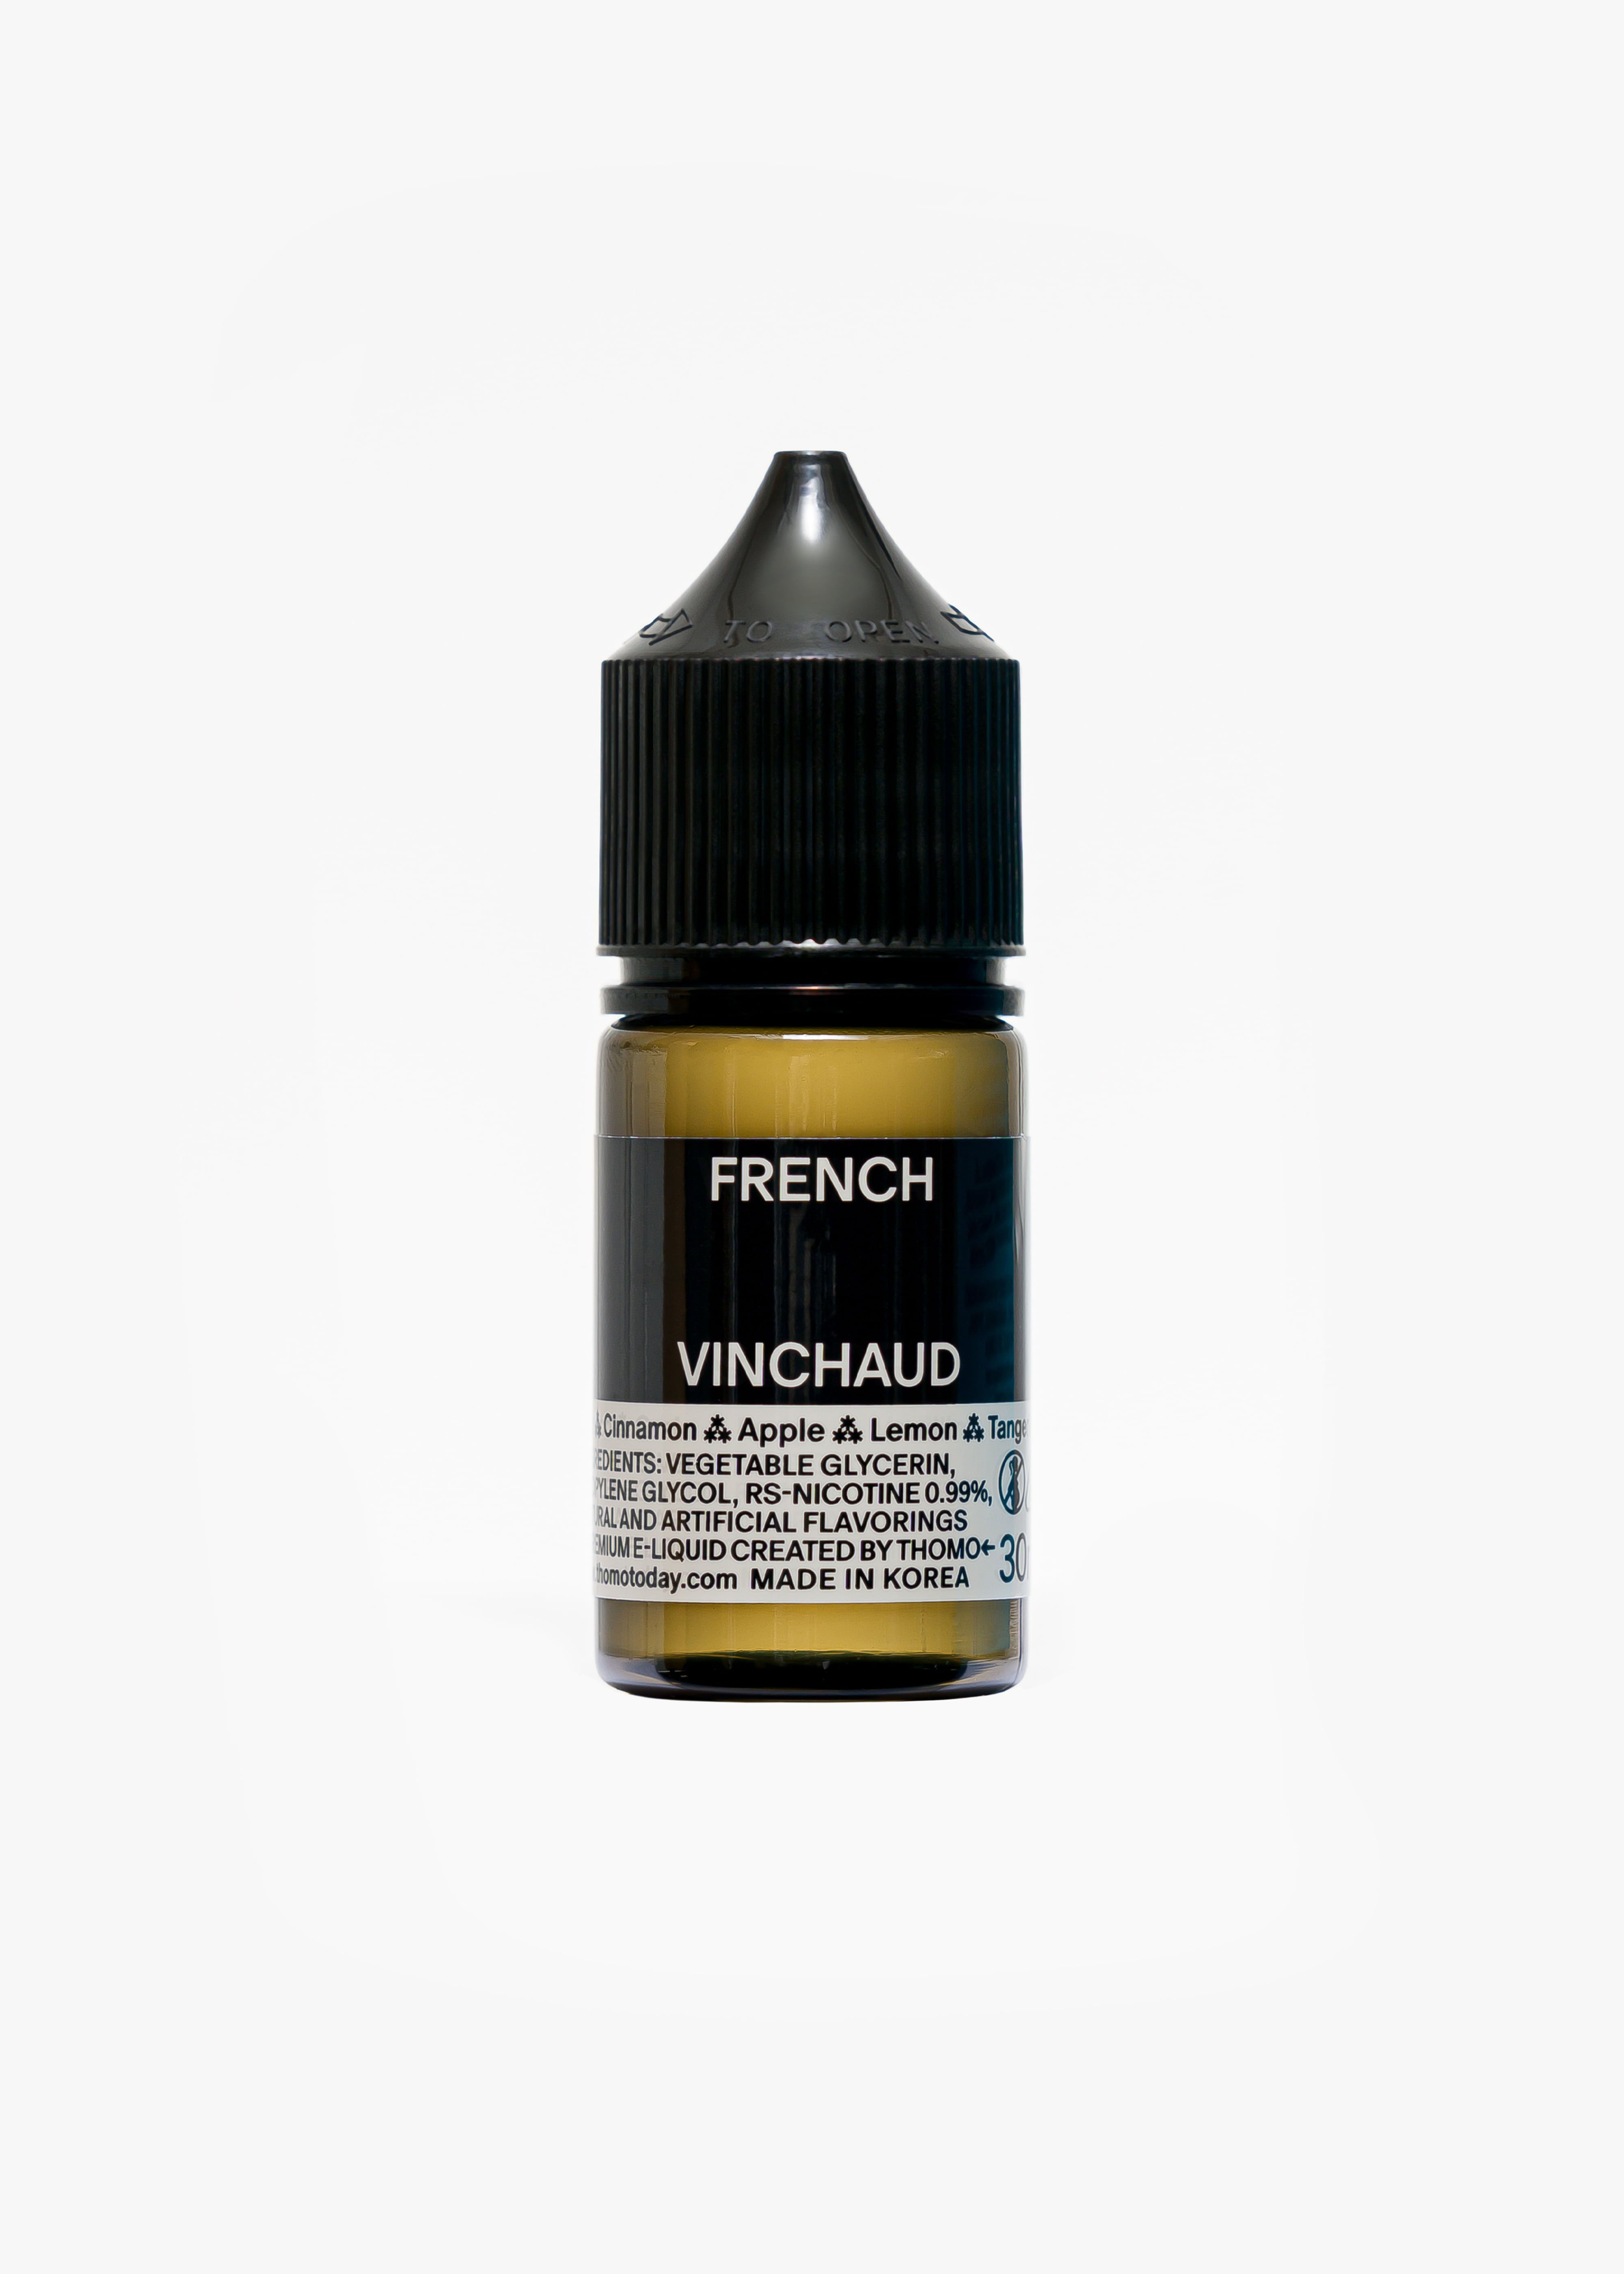 French VinChaud